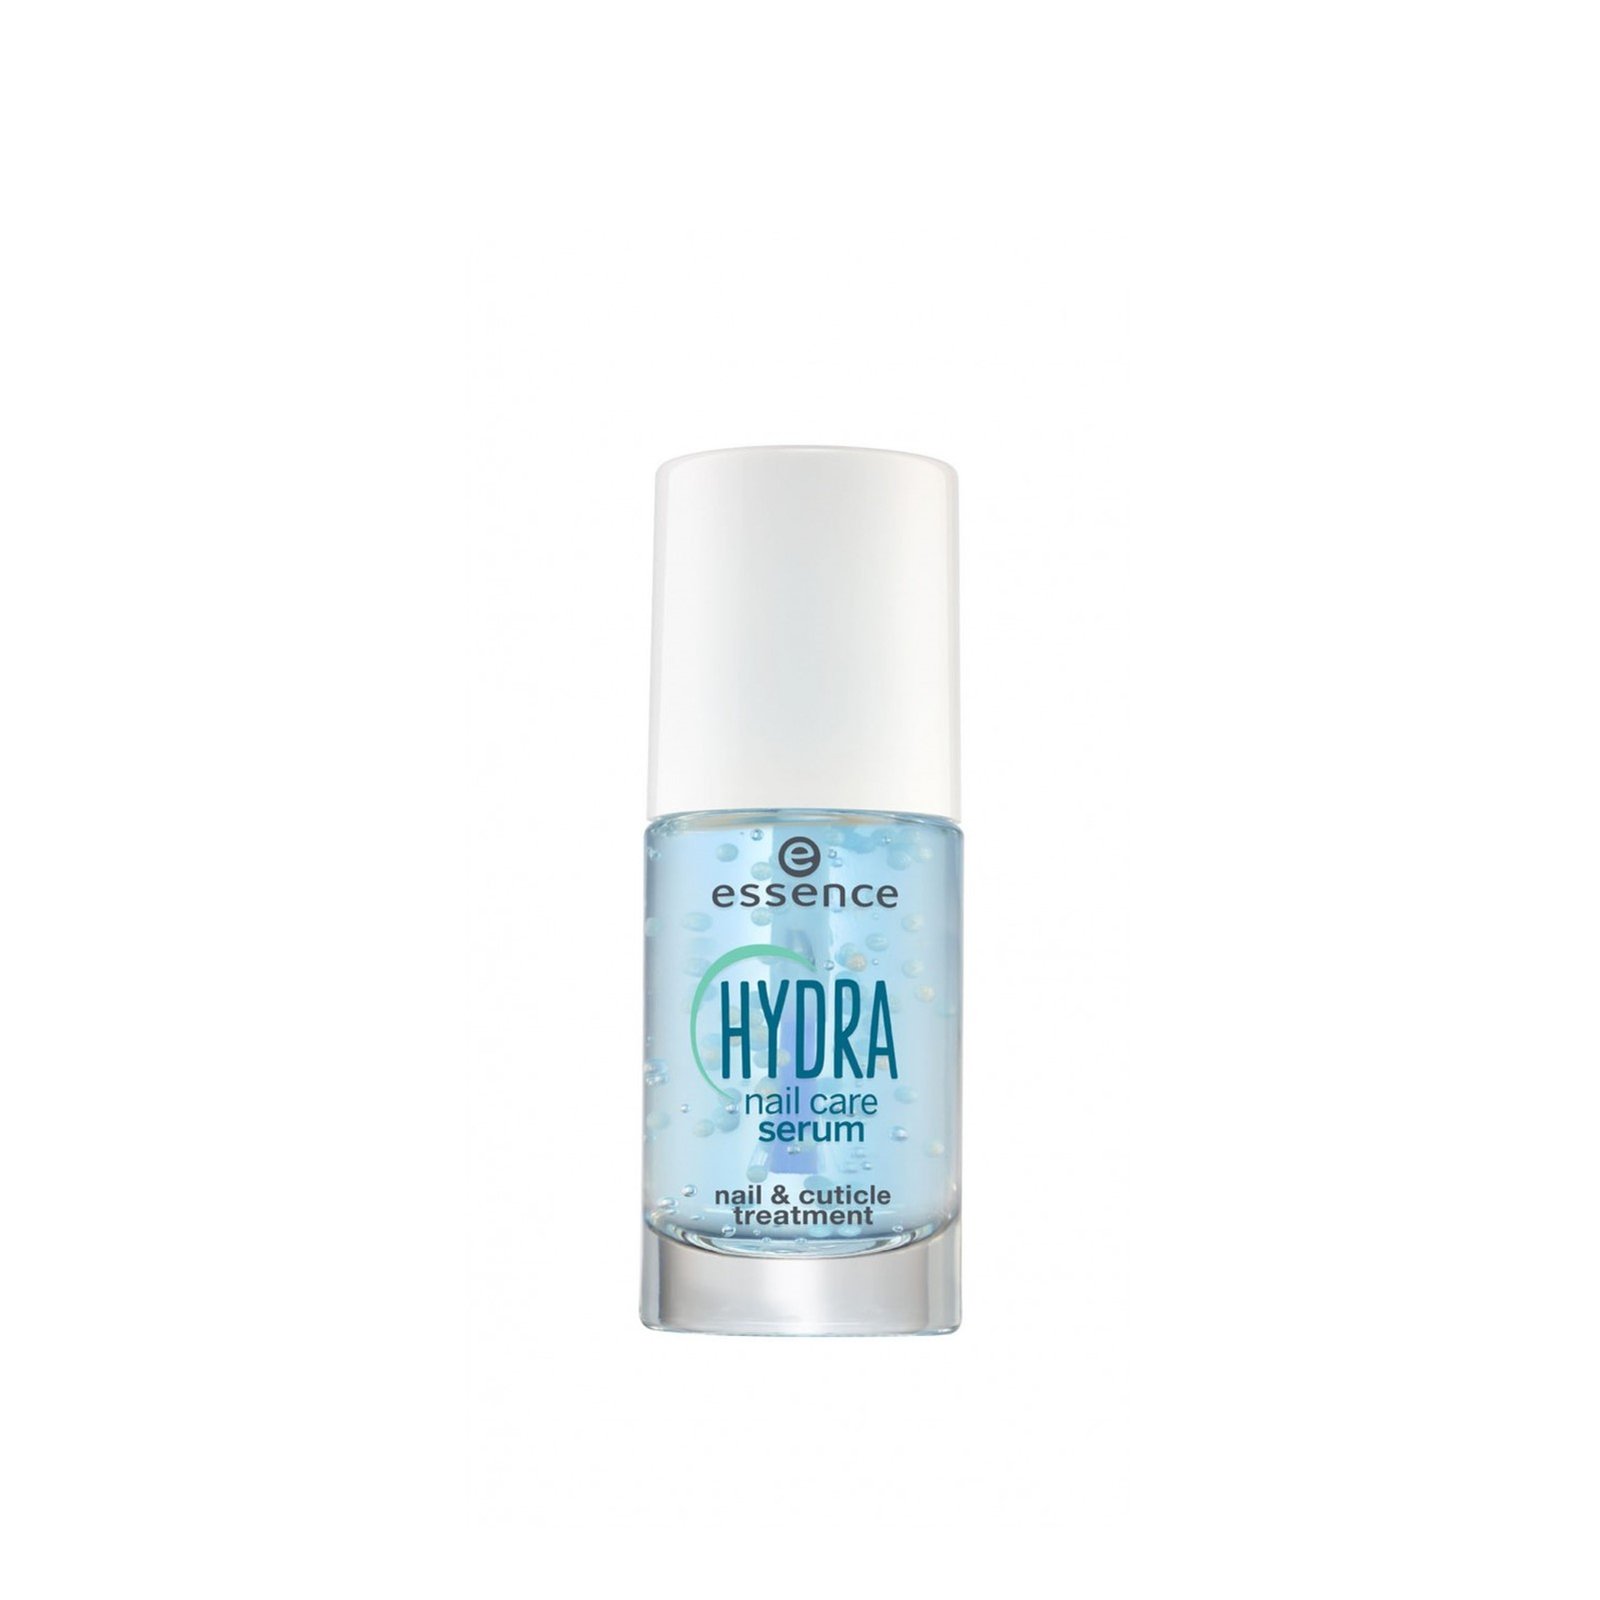 essence Hydra Nail Care Serum 8ml